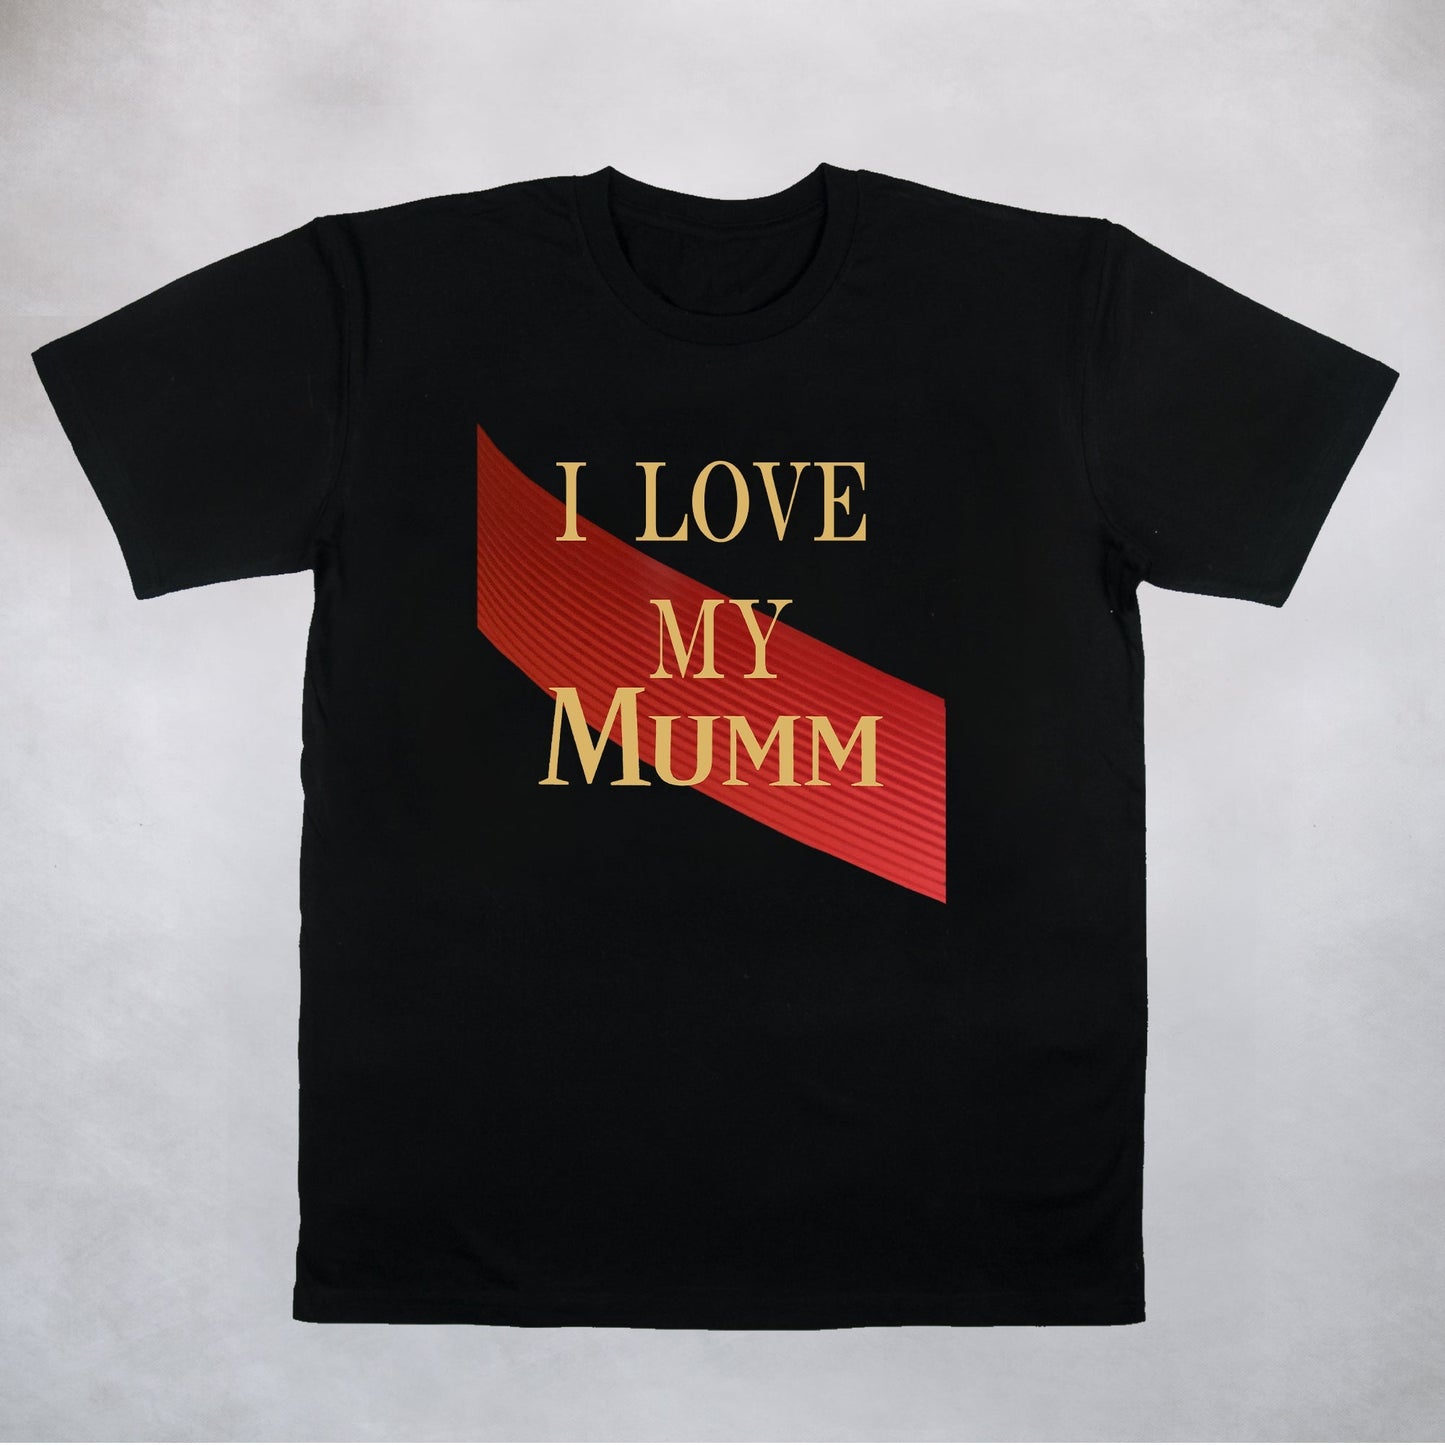 Classy Duds Short Sleeve T-Shirts S / Black / Standard I Love My Mumm Tee